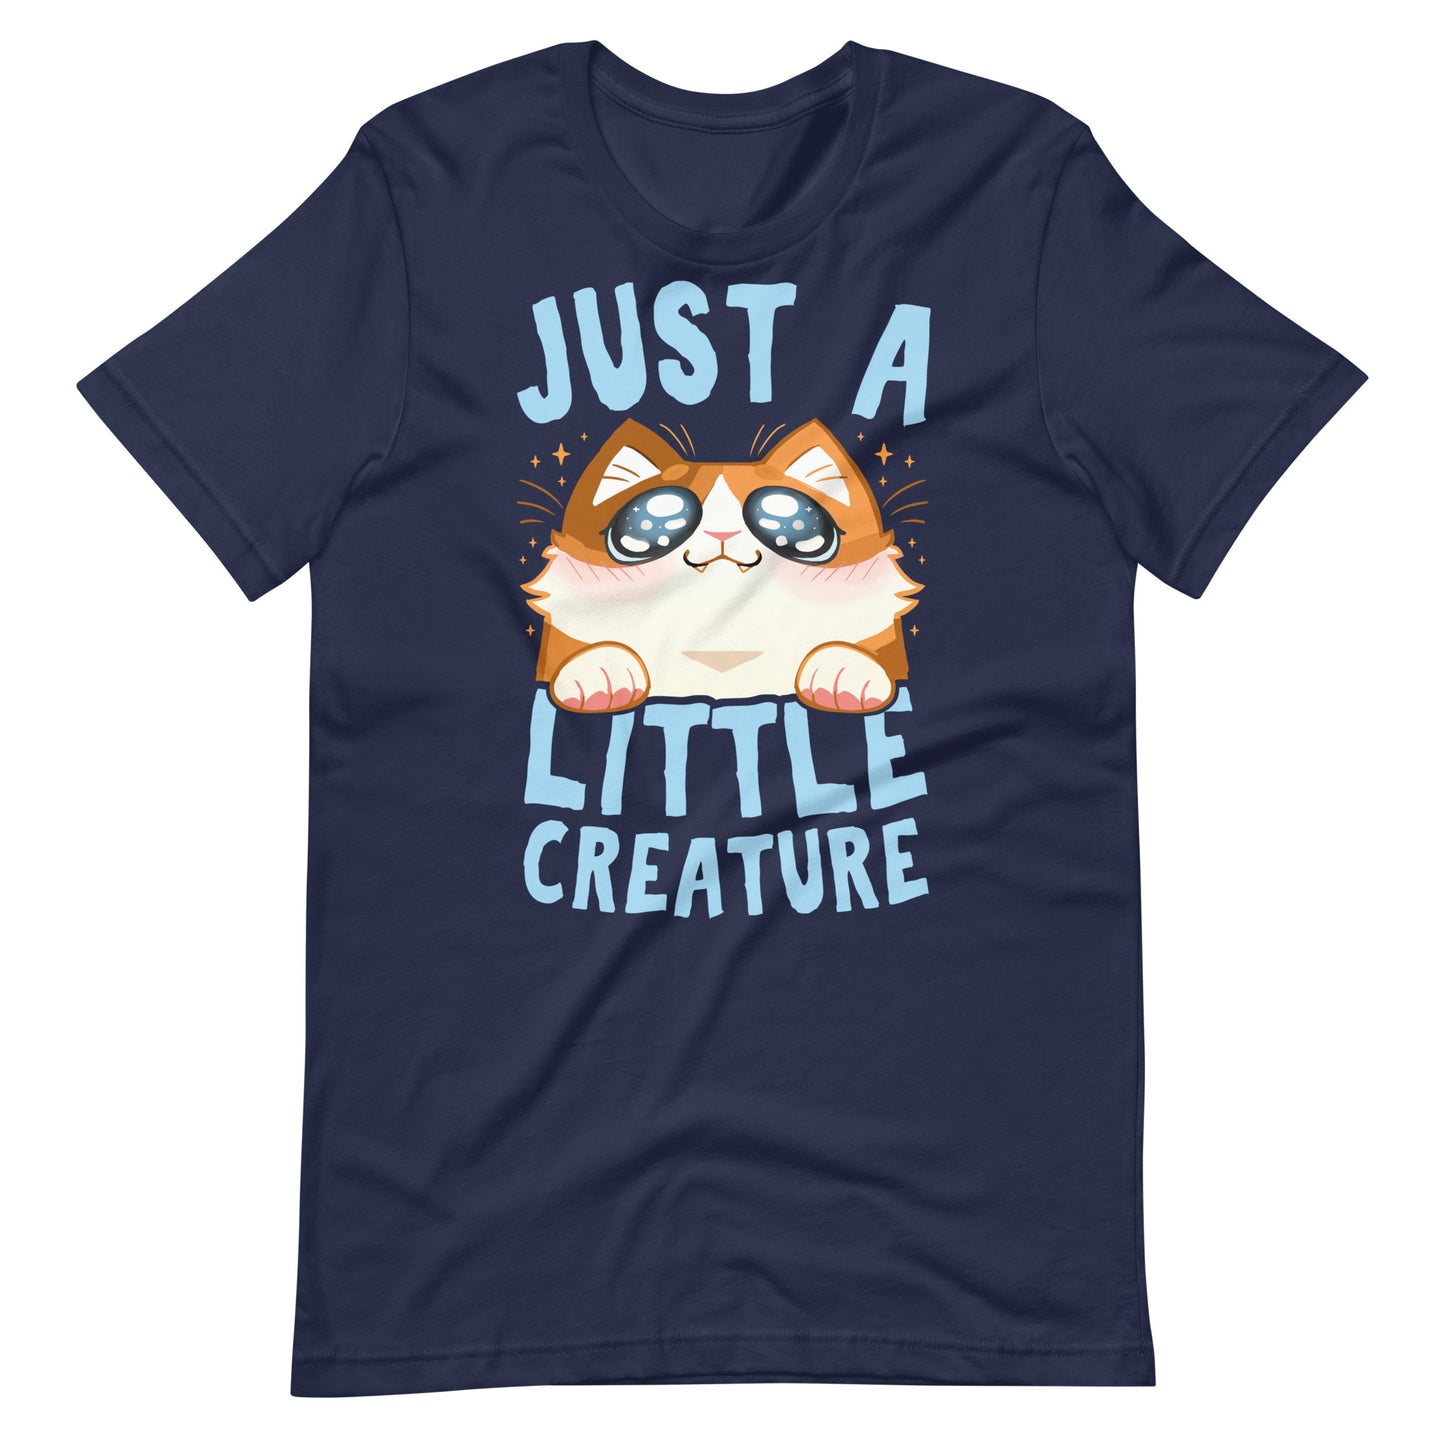 Just a Little Creature Unisex T-Shirt by The Shirt Hoard